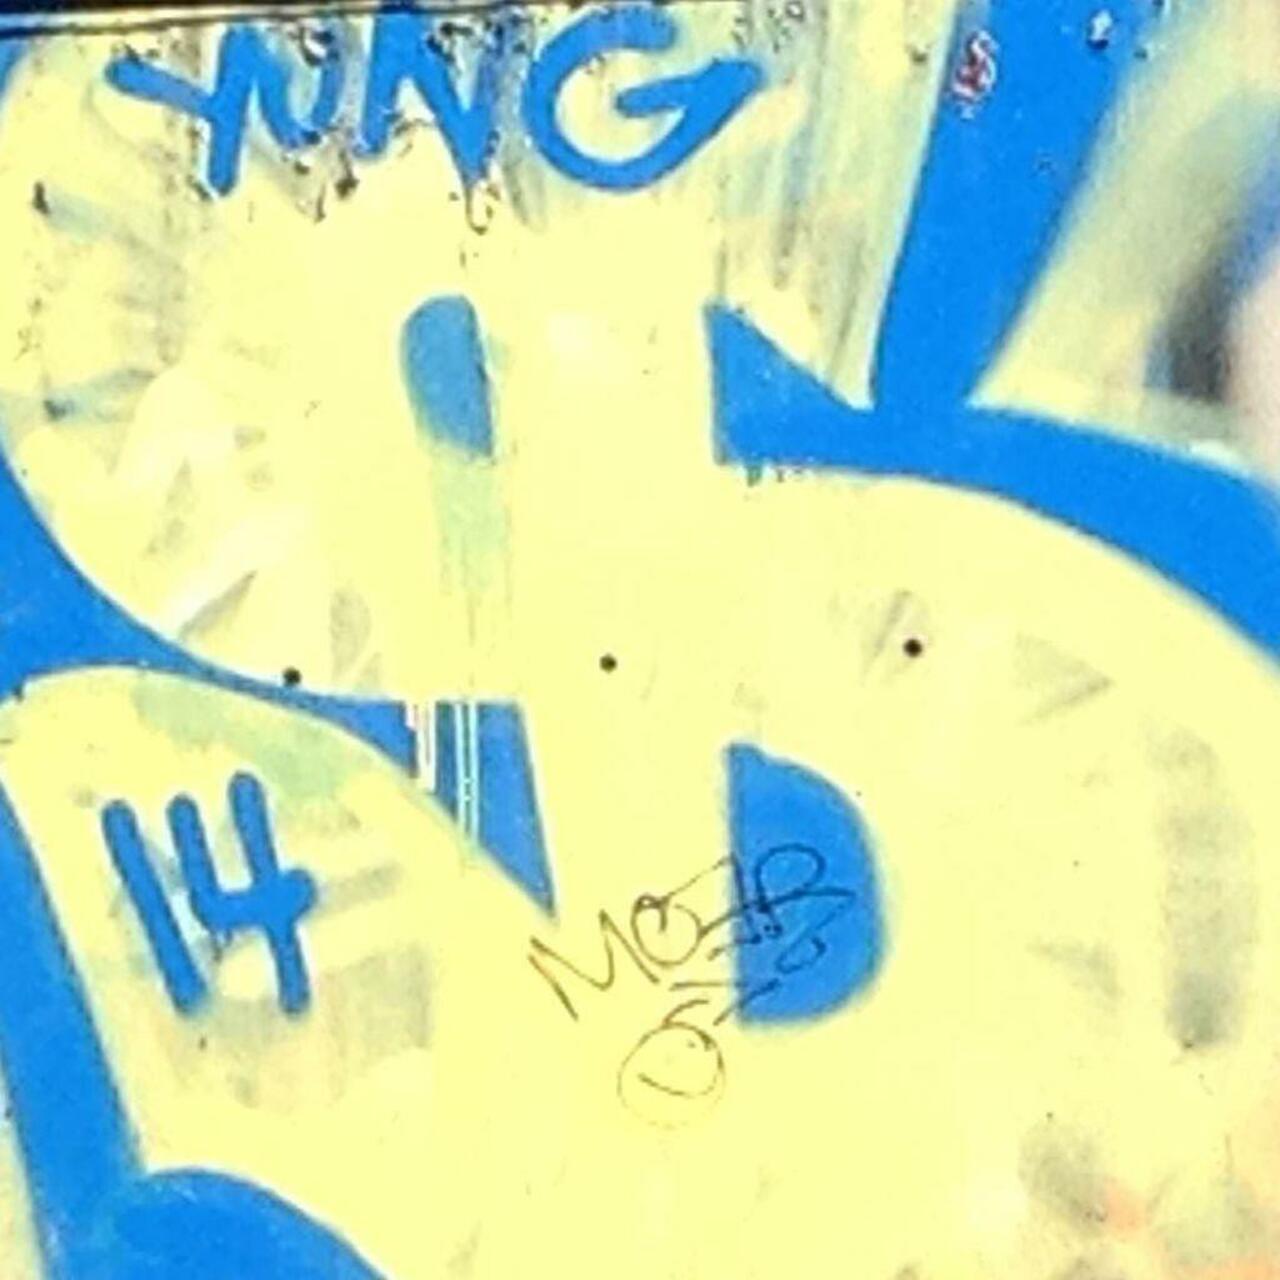 #spraycan #spraypaint #tagging #streetart #graffiti #GraffitiArt #graffitiporn http://ift.tt/1Vjglto http://t.co/ht3oXEwUzJ